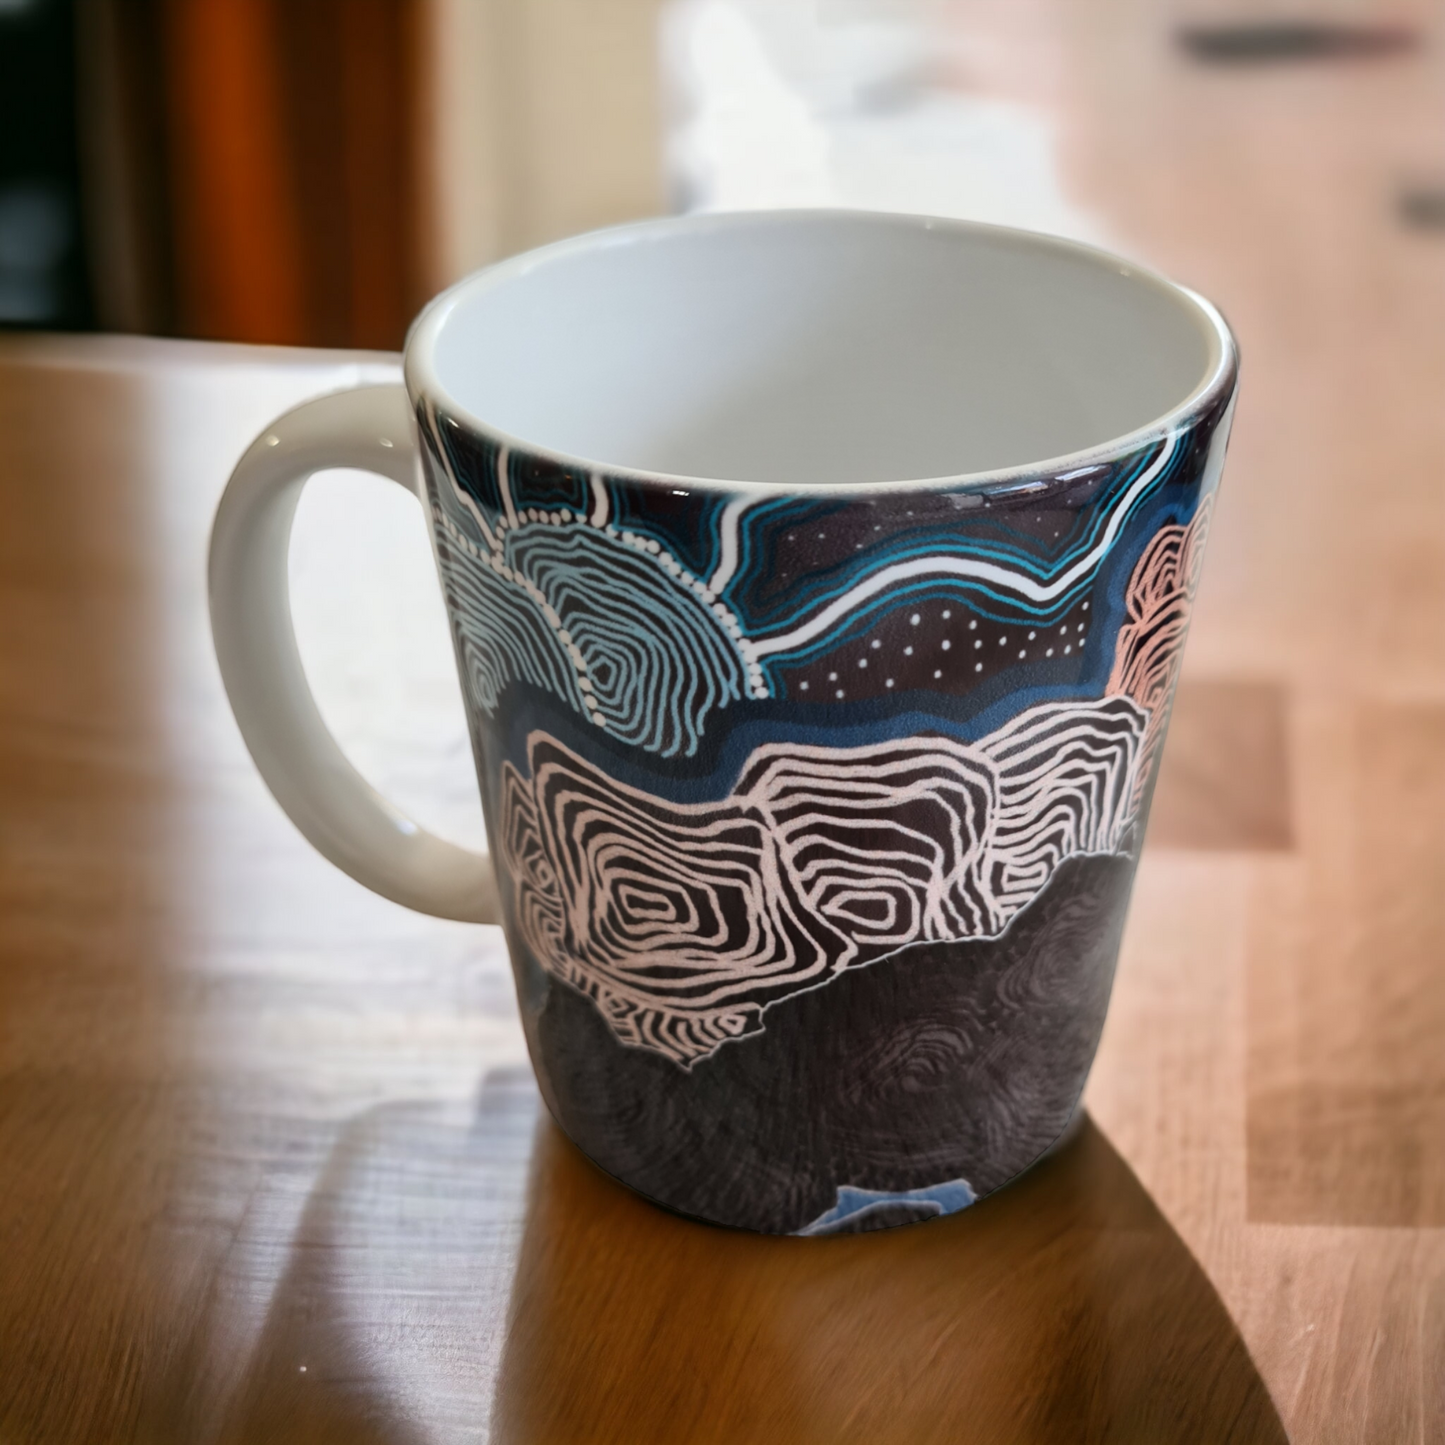 Ceramic mug - "Power of Mother Earth"